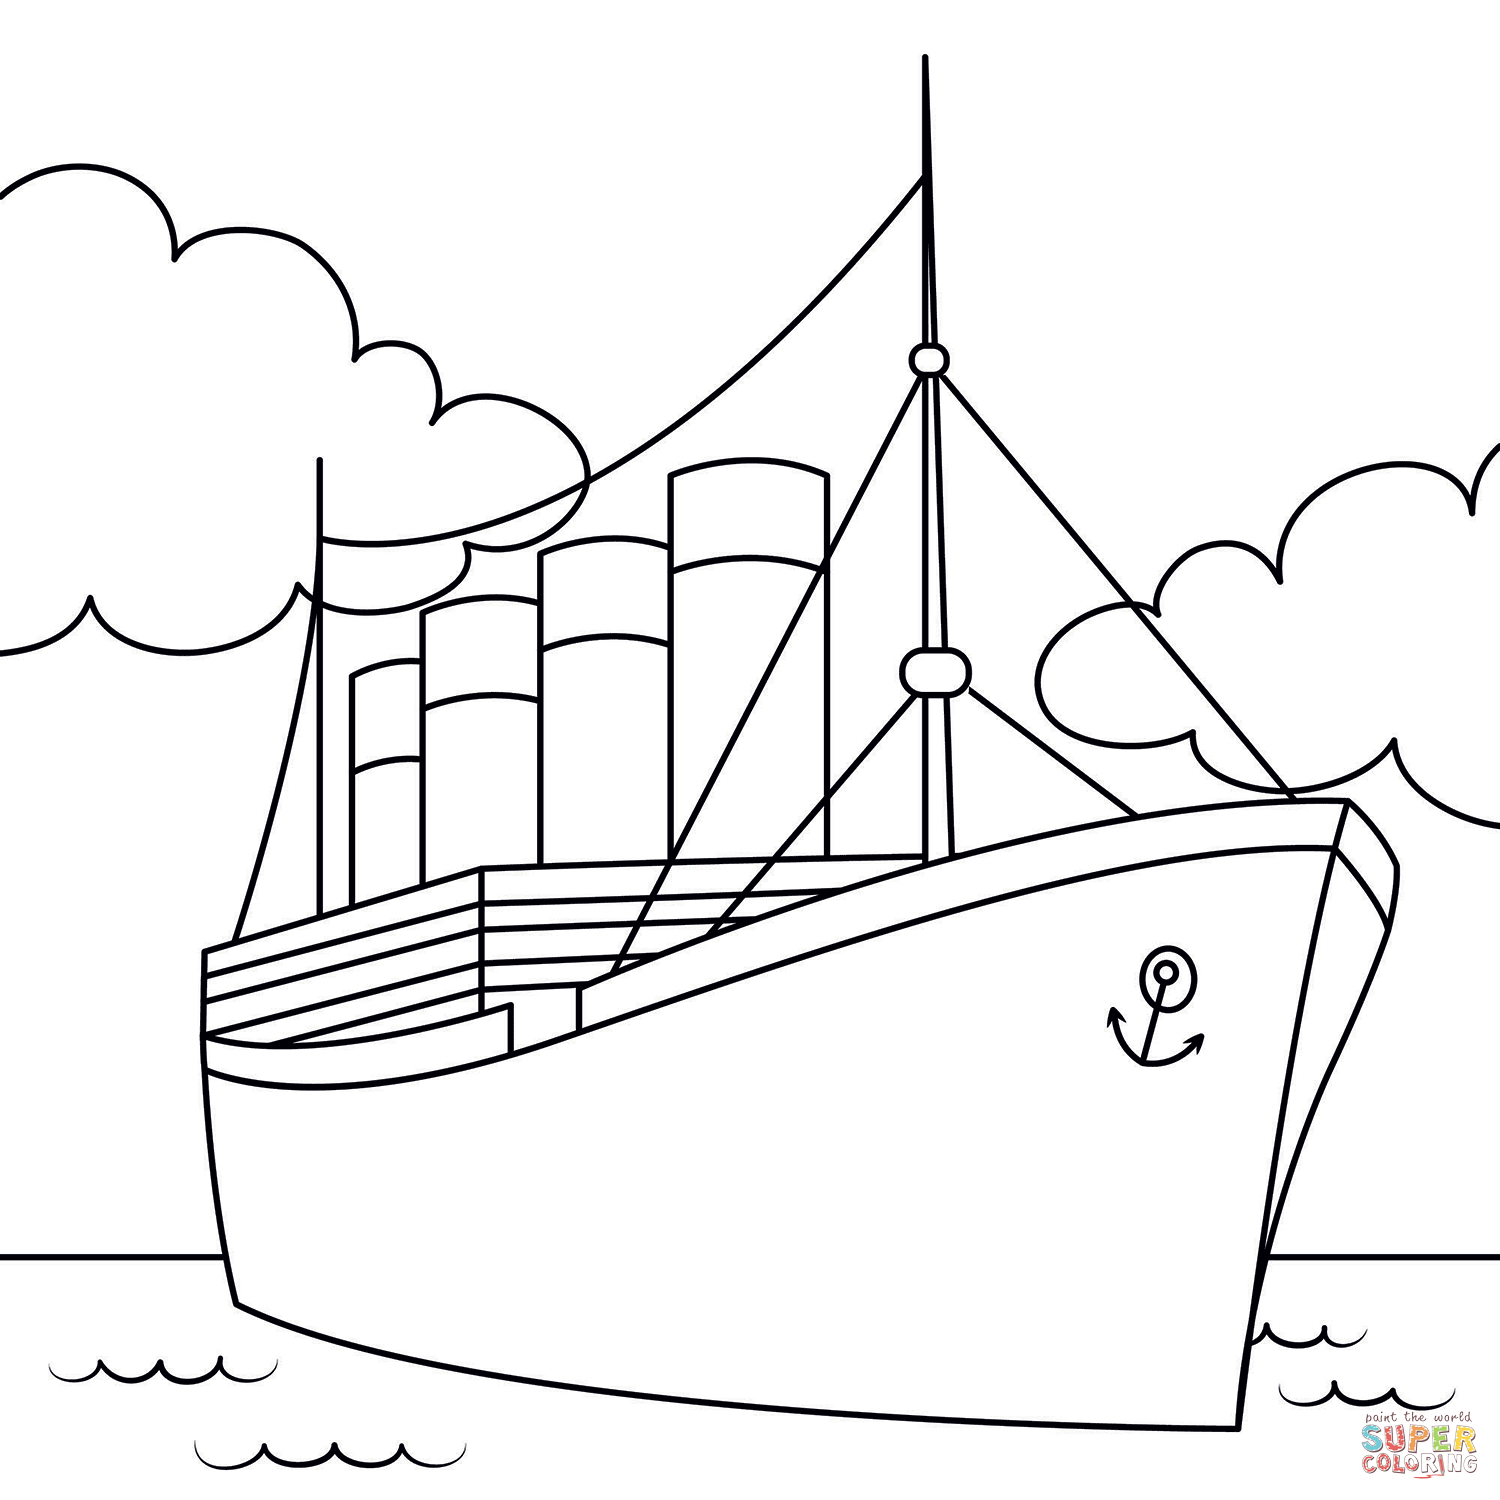 Titanic coloring page | Free Printable ...